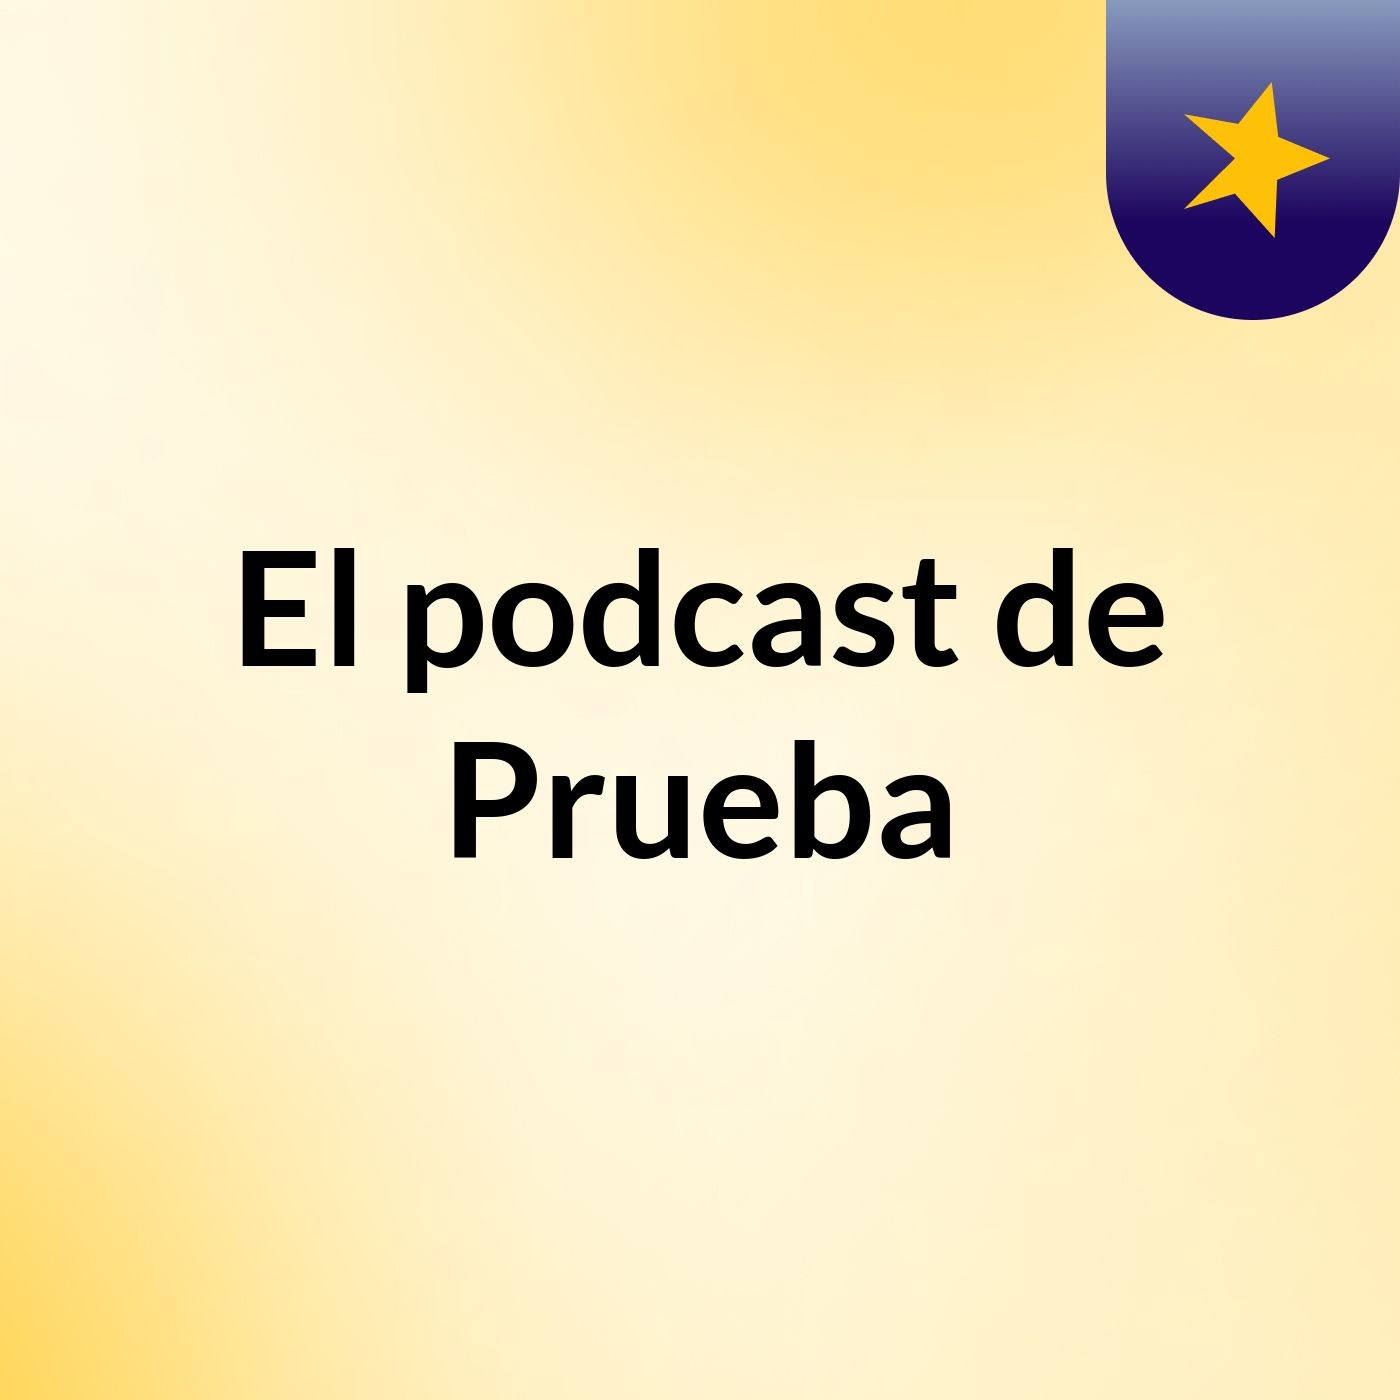 El podcast de Prueba